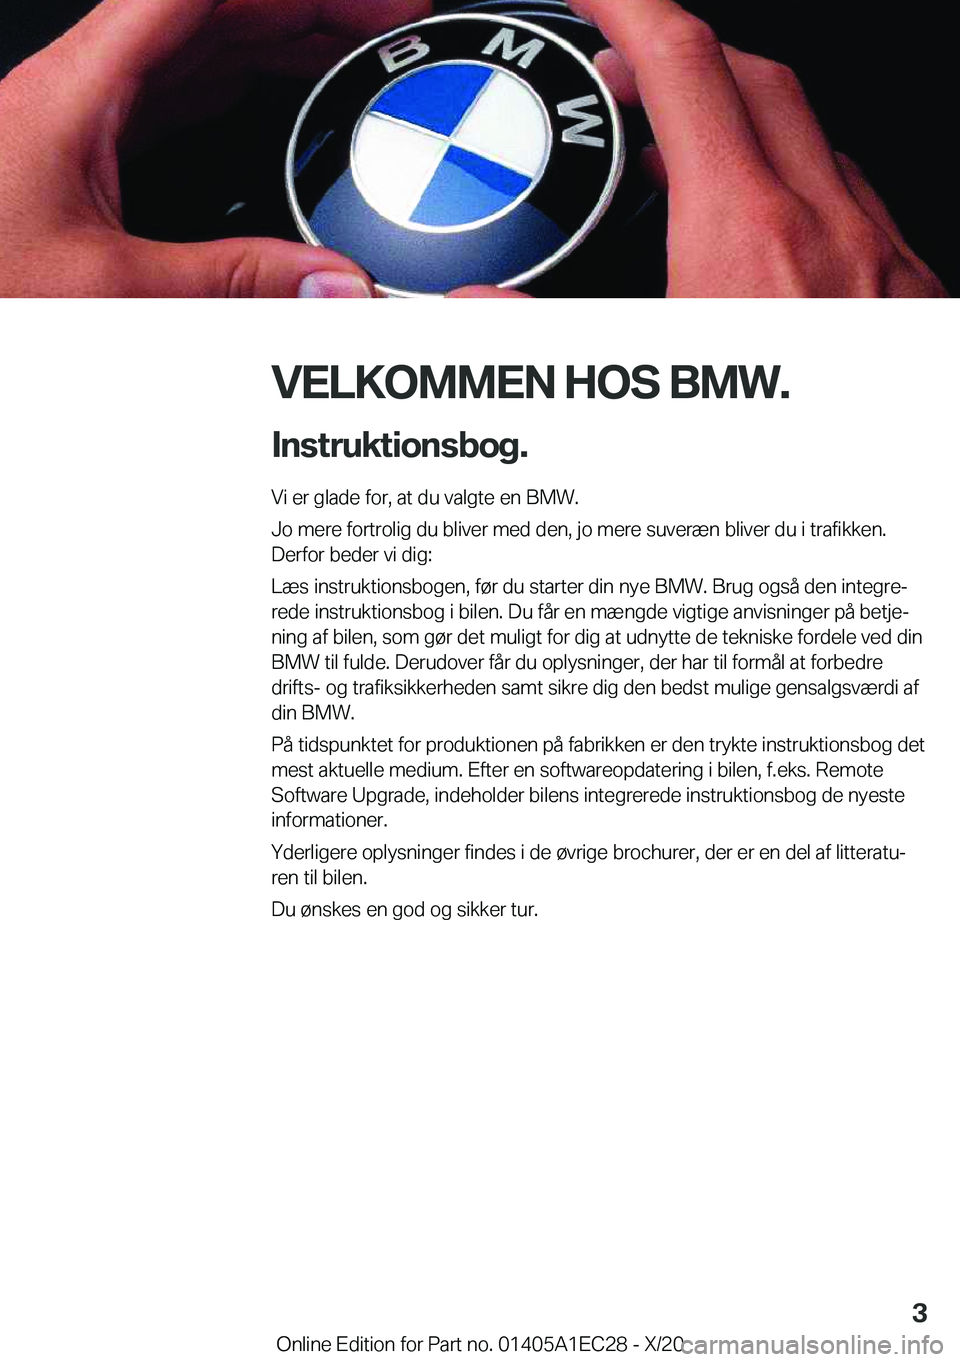 BMW 8 SERIES GRAN COUPE 2021  InstruktionsbØger (in Danish) �V�E�L�K�O�M�M�E�N��H�O�S��B�M�W�.
�I�n�s�t�r�u�k�t�i�o�n�s�b�o�g�. �V�i��e�r��g�l�a�d�e��f�o�r�,��a�t��d�u��v�a�l�g�t�e��e�n��B�M�W�.
�J�o��m�e�r�e��f�o�r�t�r�o�l�i�g��d�u��b�l�i�v�e�r�